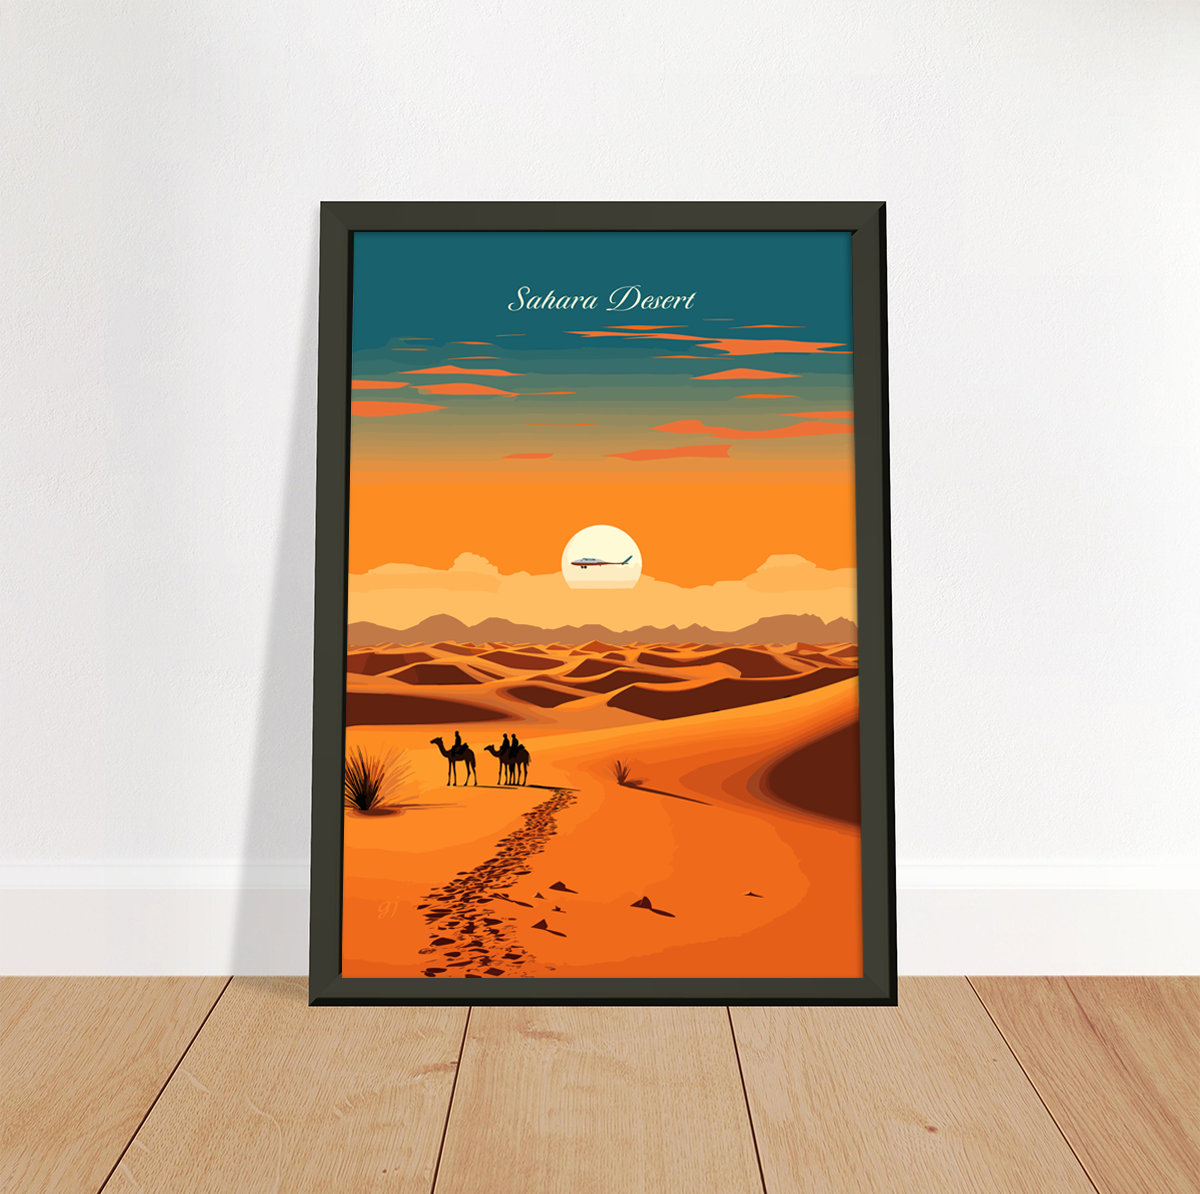 Sahara poster by bon voyage design